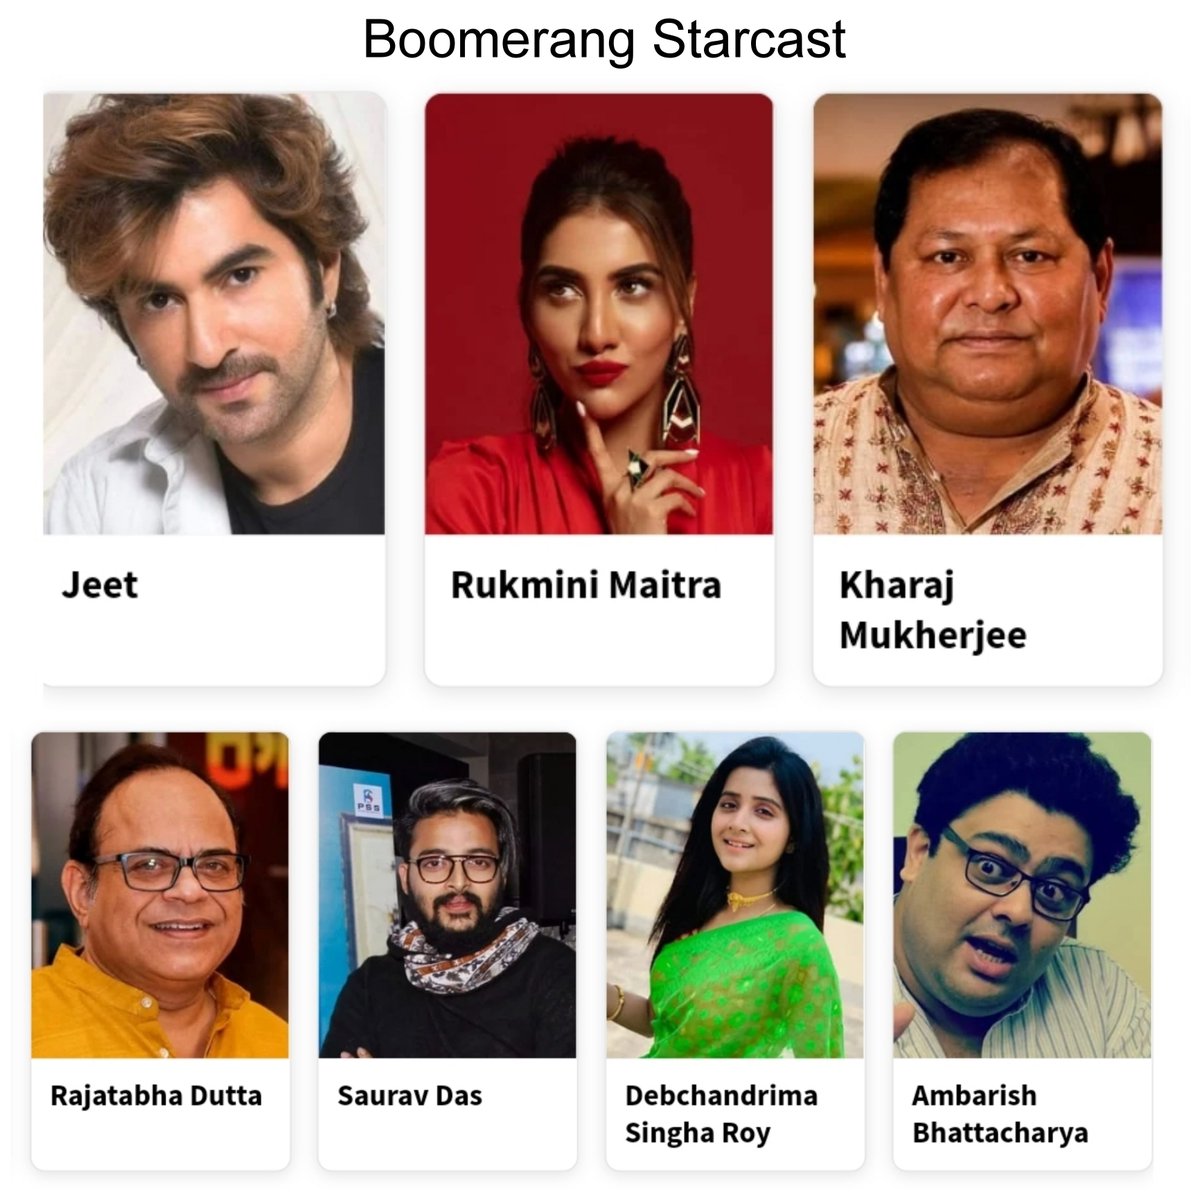 #Boomerang StarCast 
@jeet30 @RukminiMaitra #KharajMukharjee
#RajatabhaDutta #SauravDas @Debchandrima2 #Ambarishbhattacharya
#jeet #jeetzfilmworks